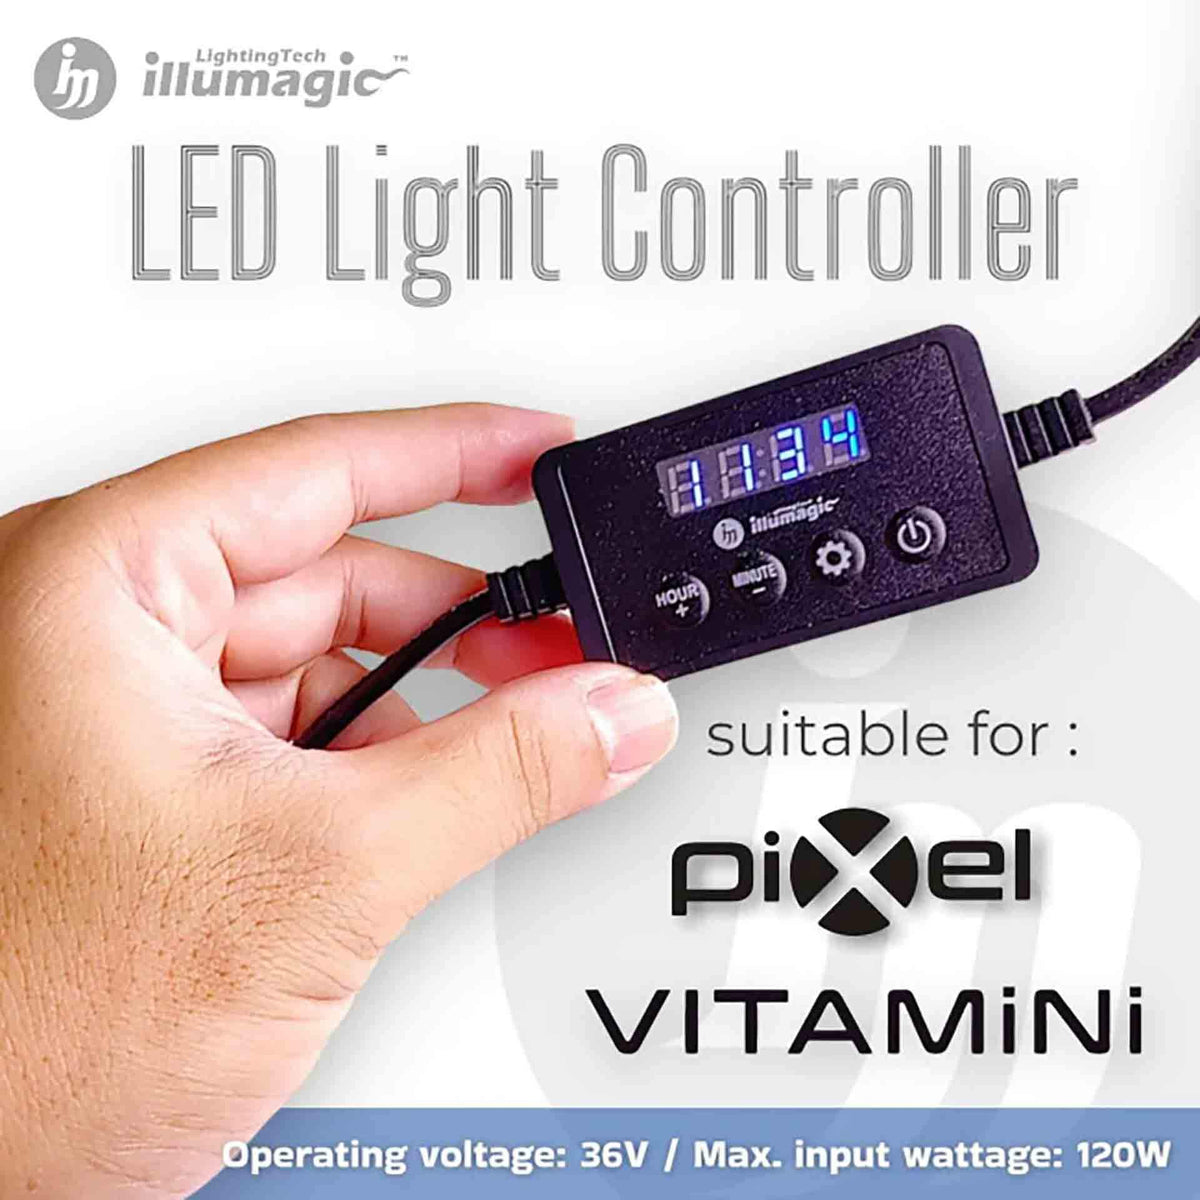 Illumagic LED Light Controller - Controller for Pixel and Vitamini